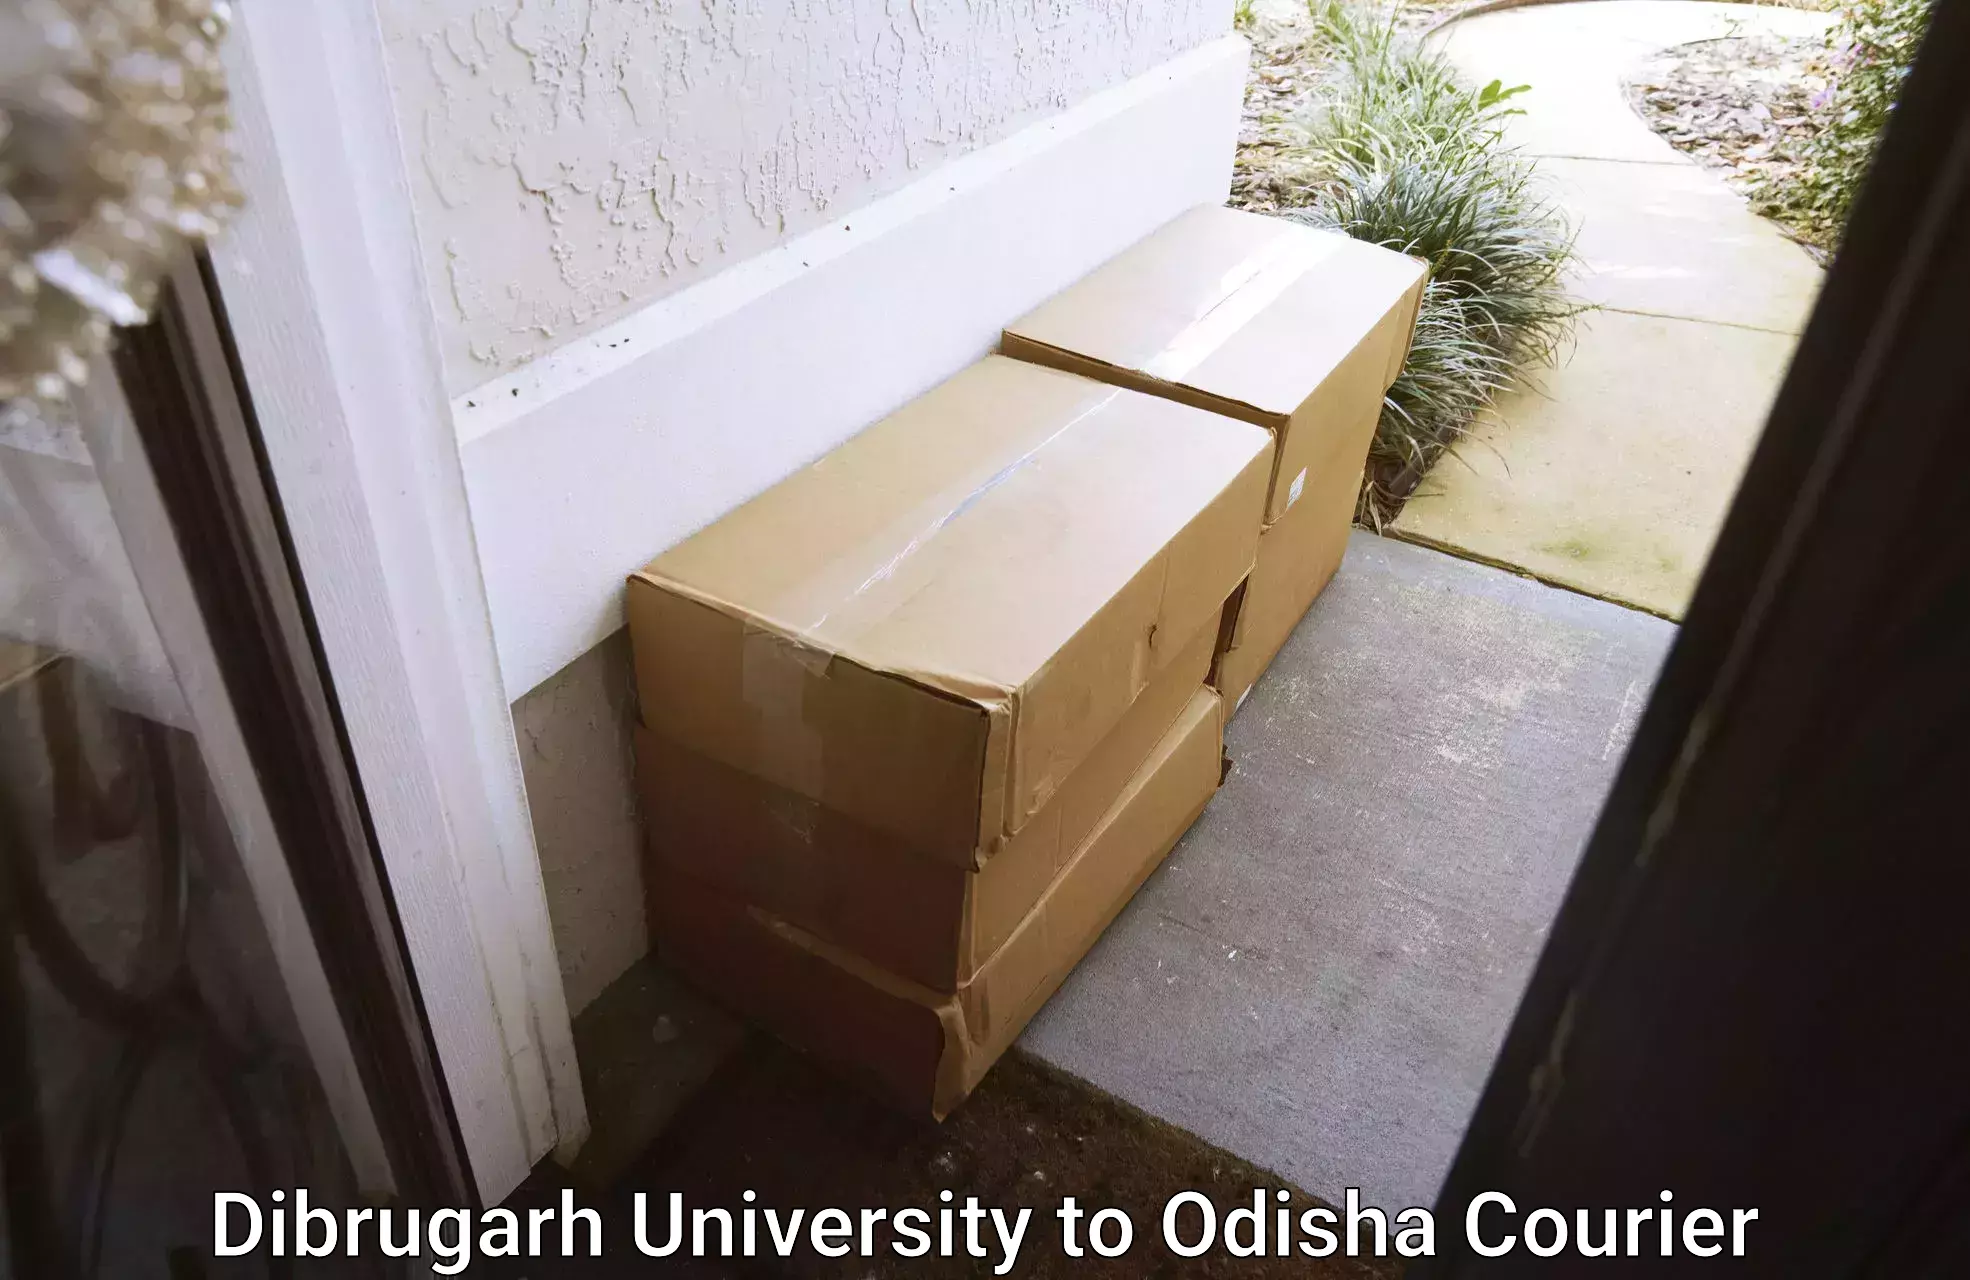 Modern delivery methods Dibrugarh University to Sohela